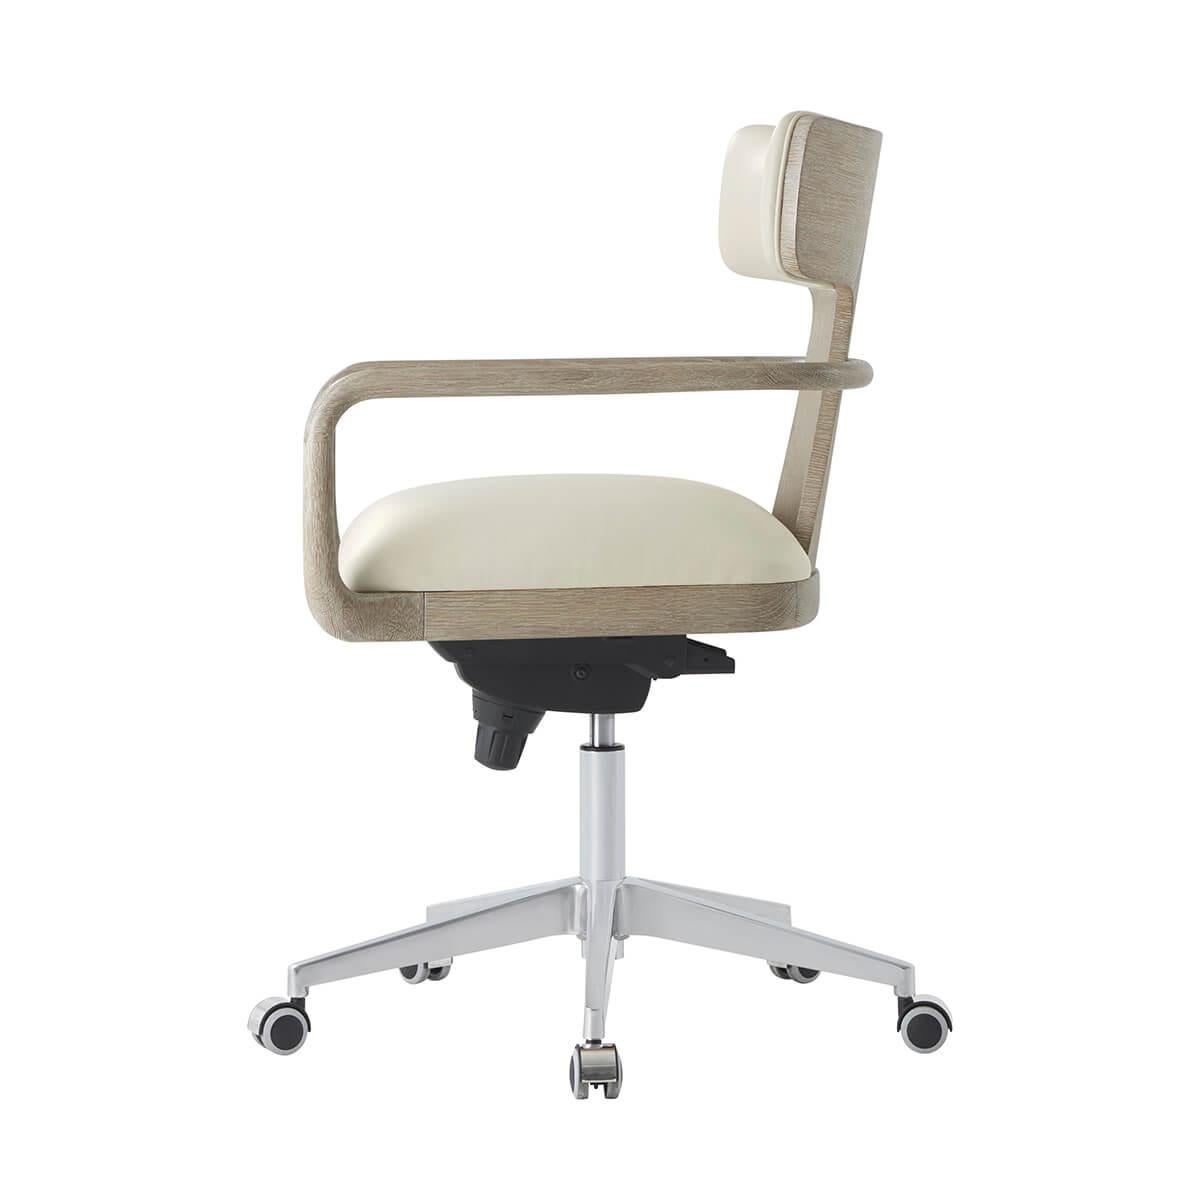 Vietnamese Organic Modern Desk Chair For Sale